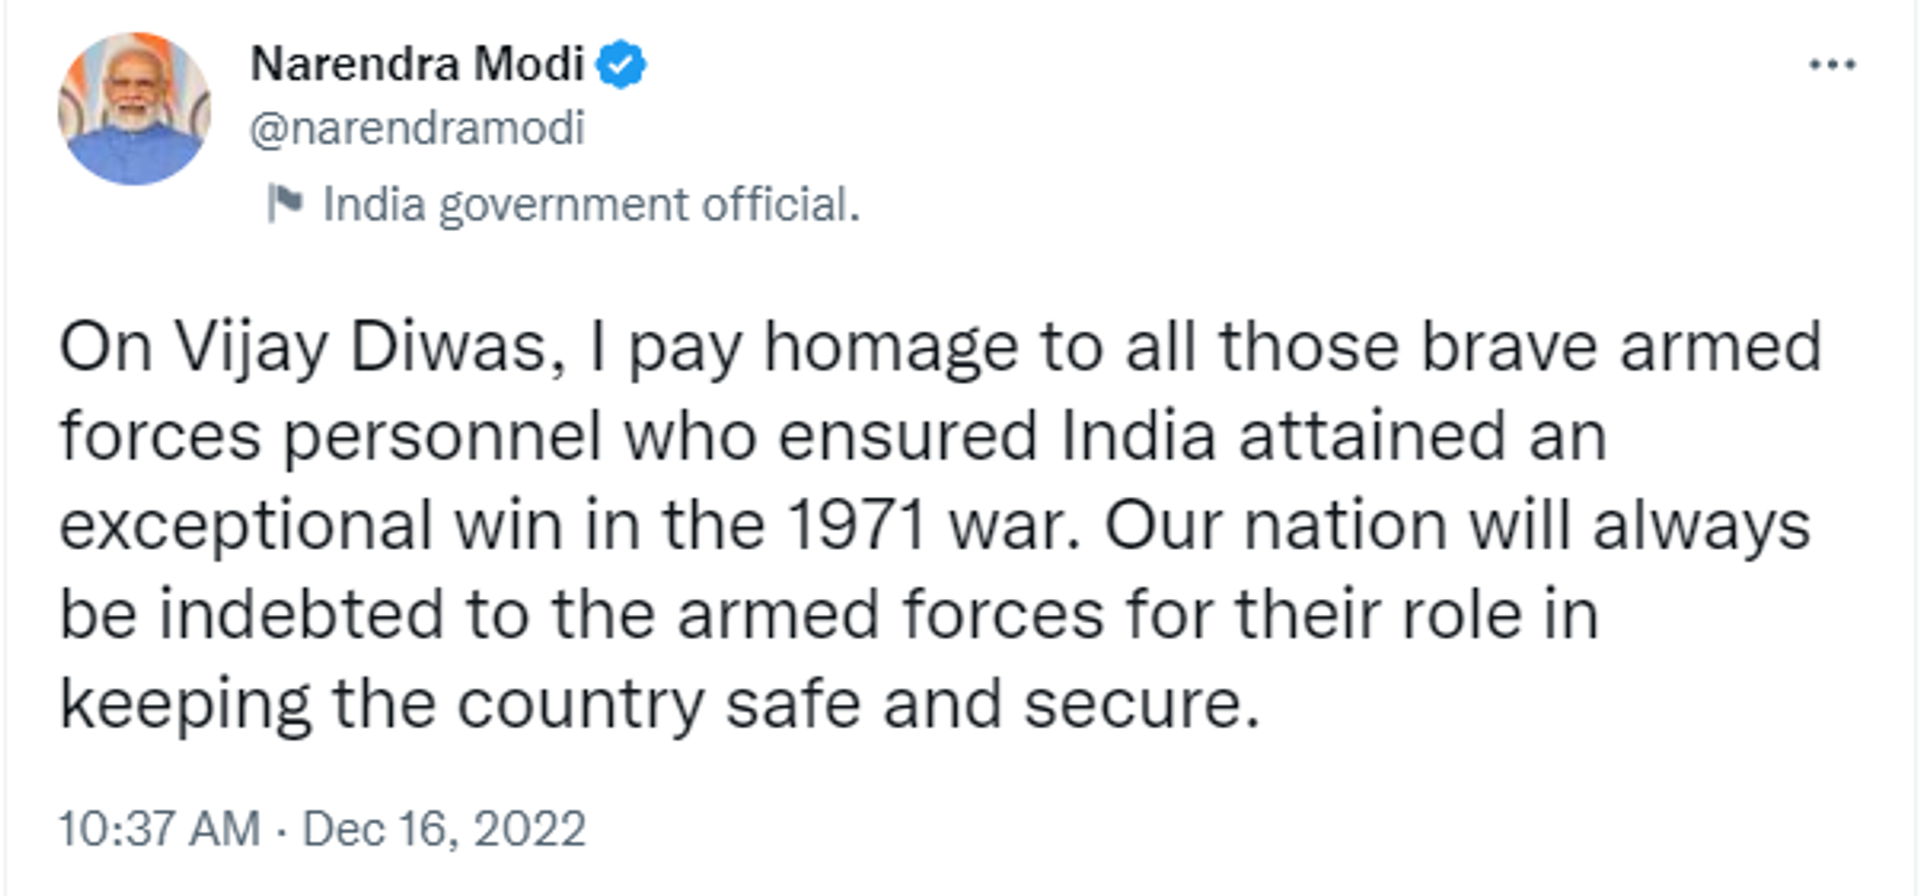 Prime Minister Narendra Modi Pays Tribute to 1971 Indo-Pak War Heroes - Sputnik India, 1920, 16.12.2022